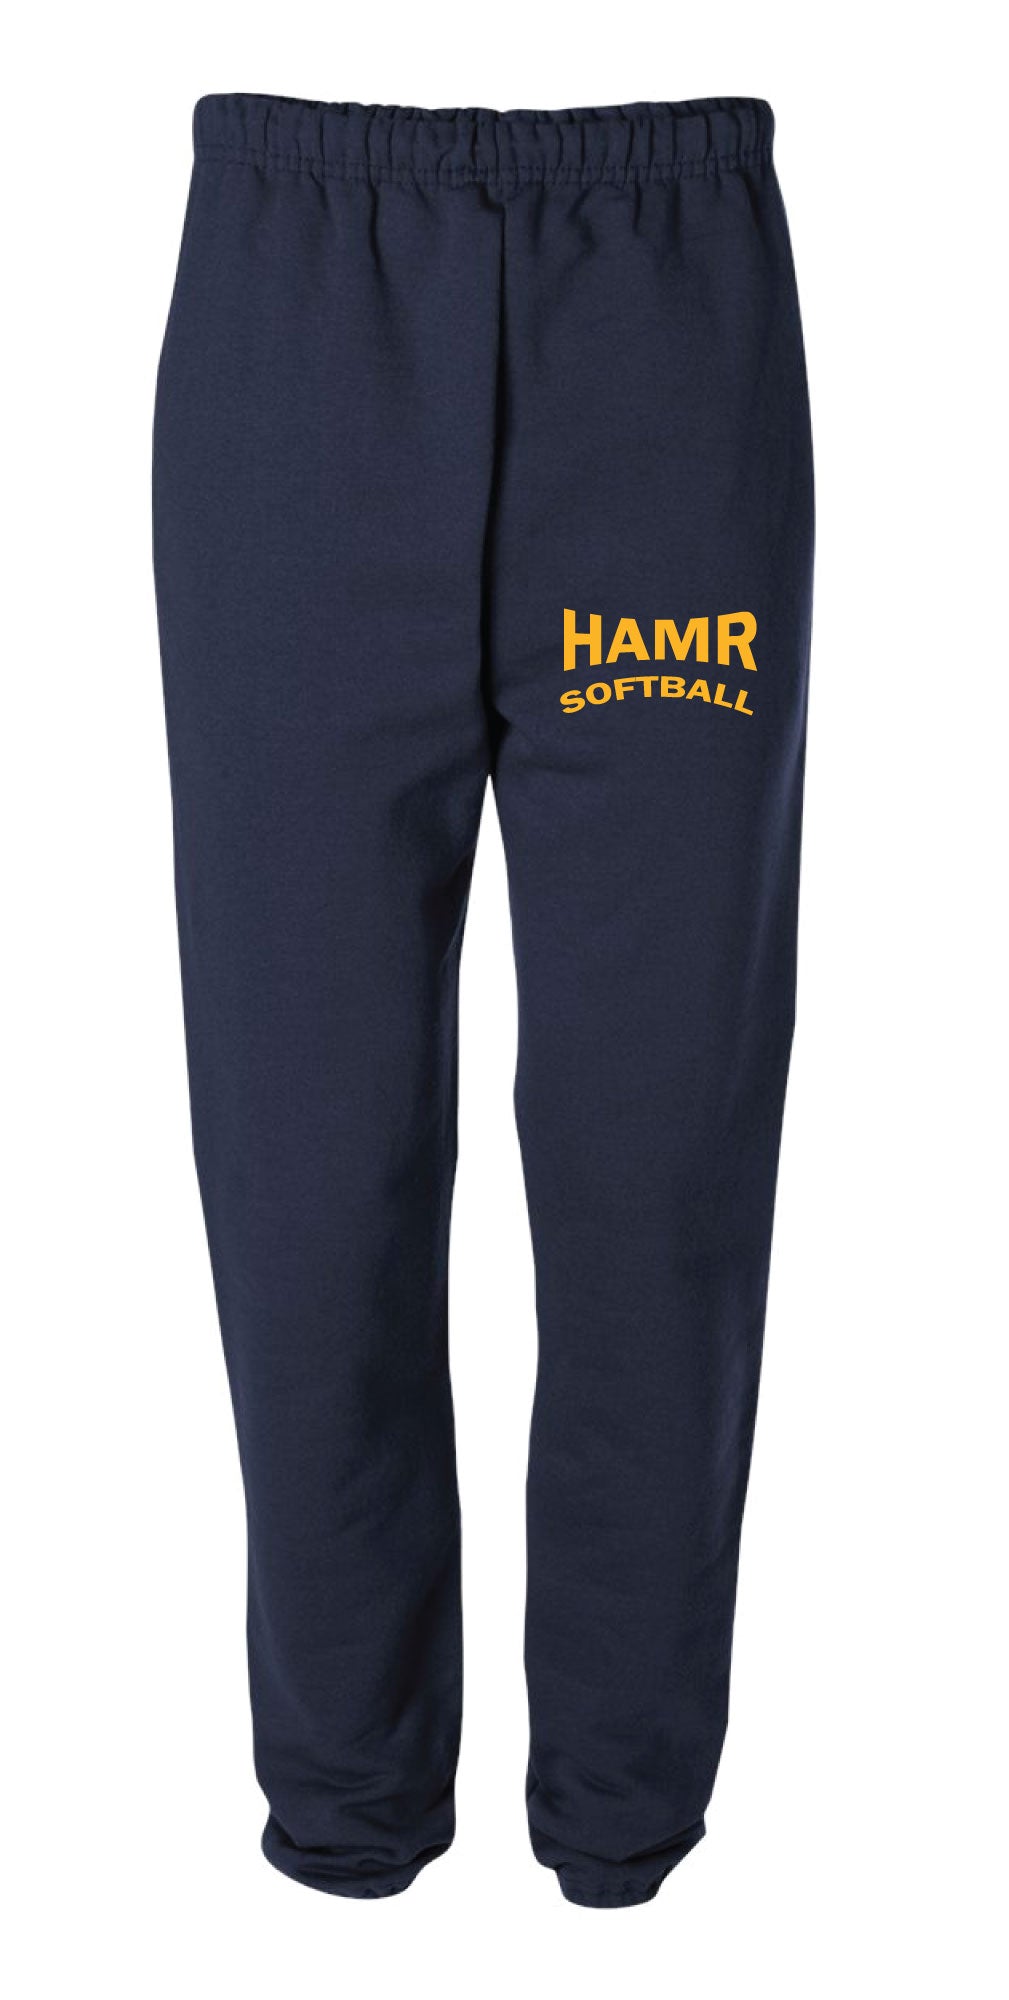 HAMR Softball Cotton Sweatpants - Navy - 5KounT2018